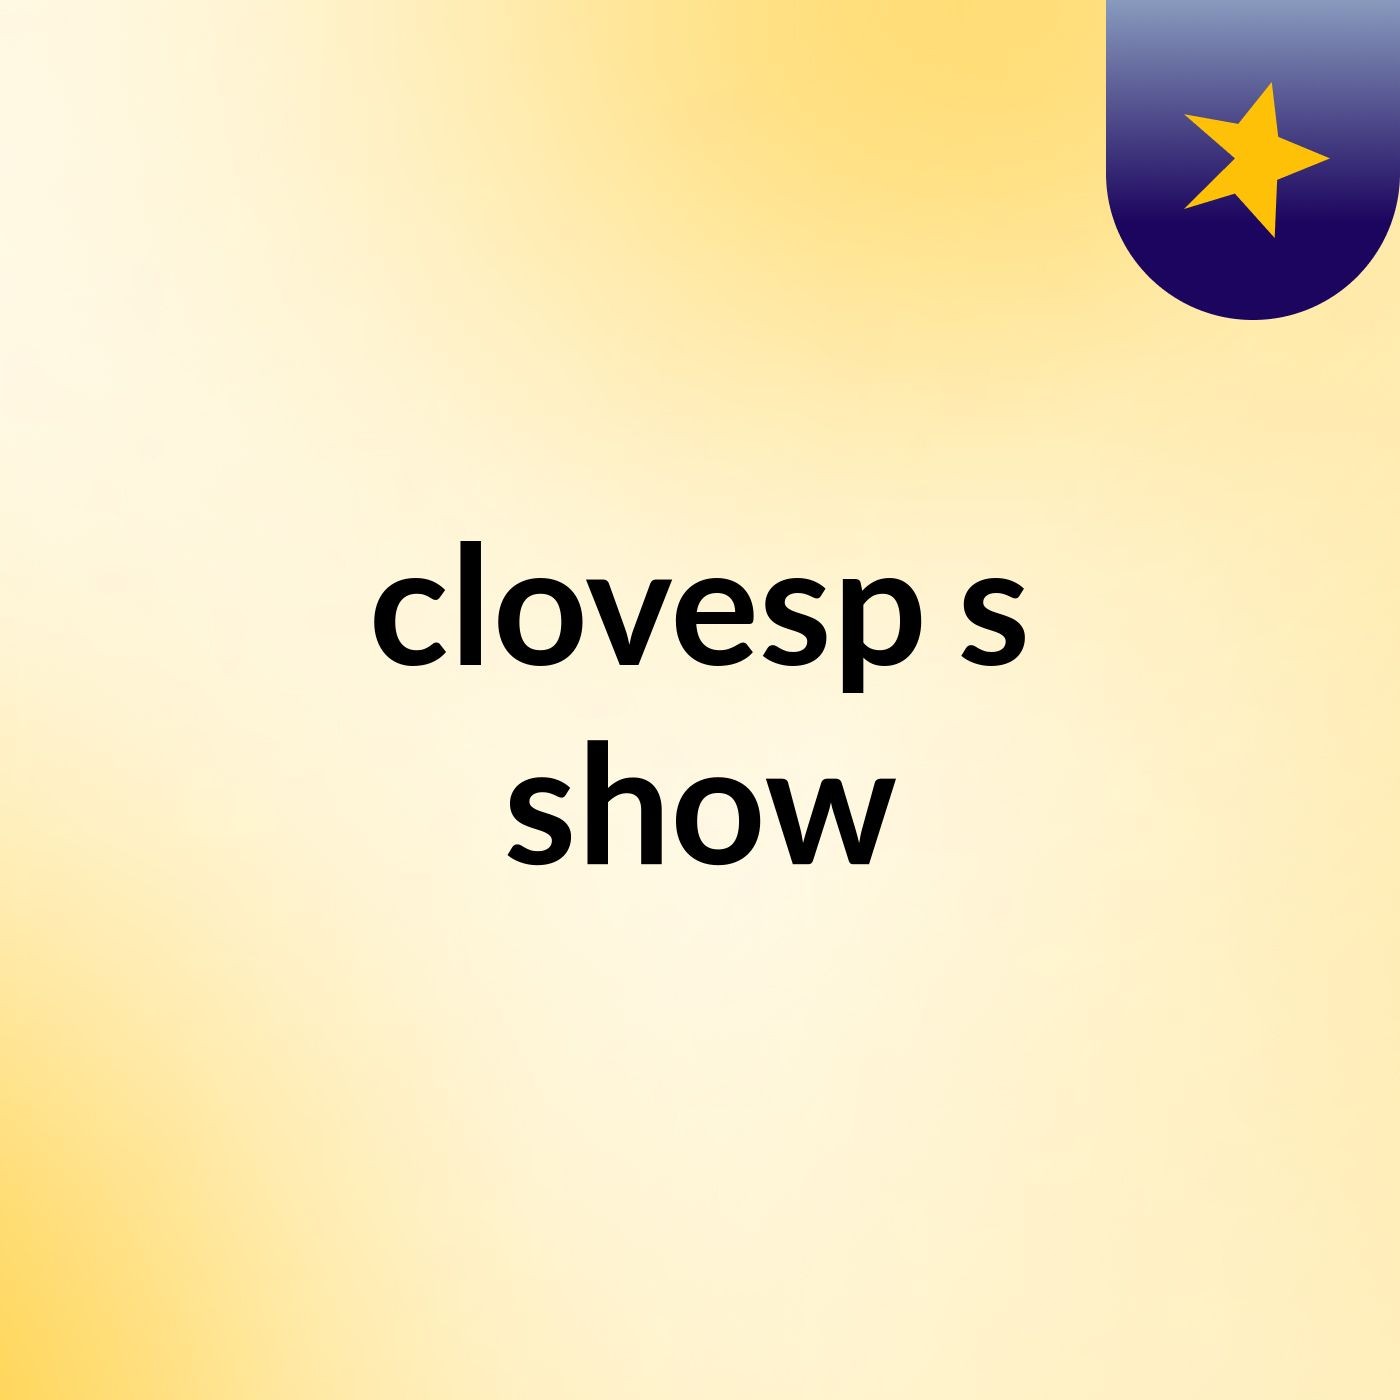 clovesp's show